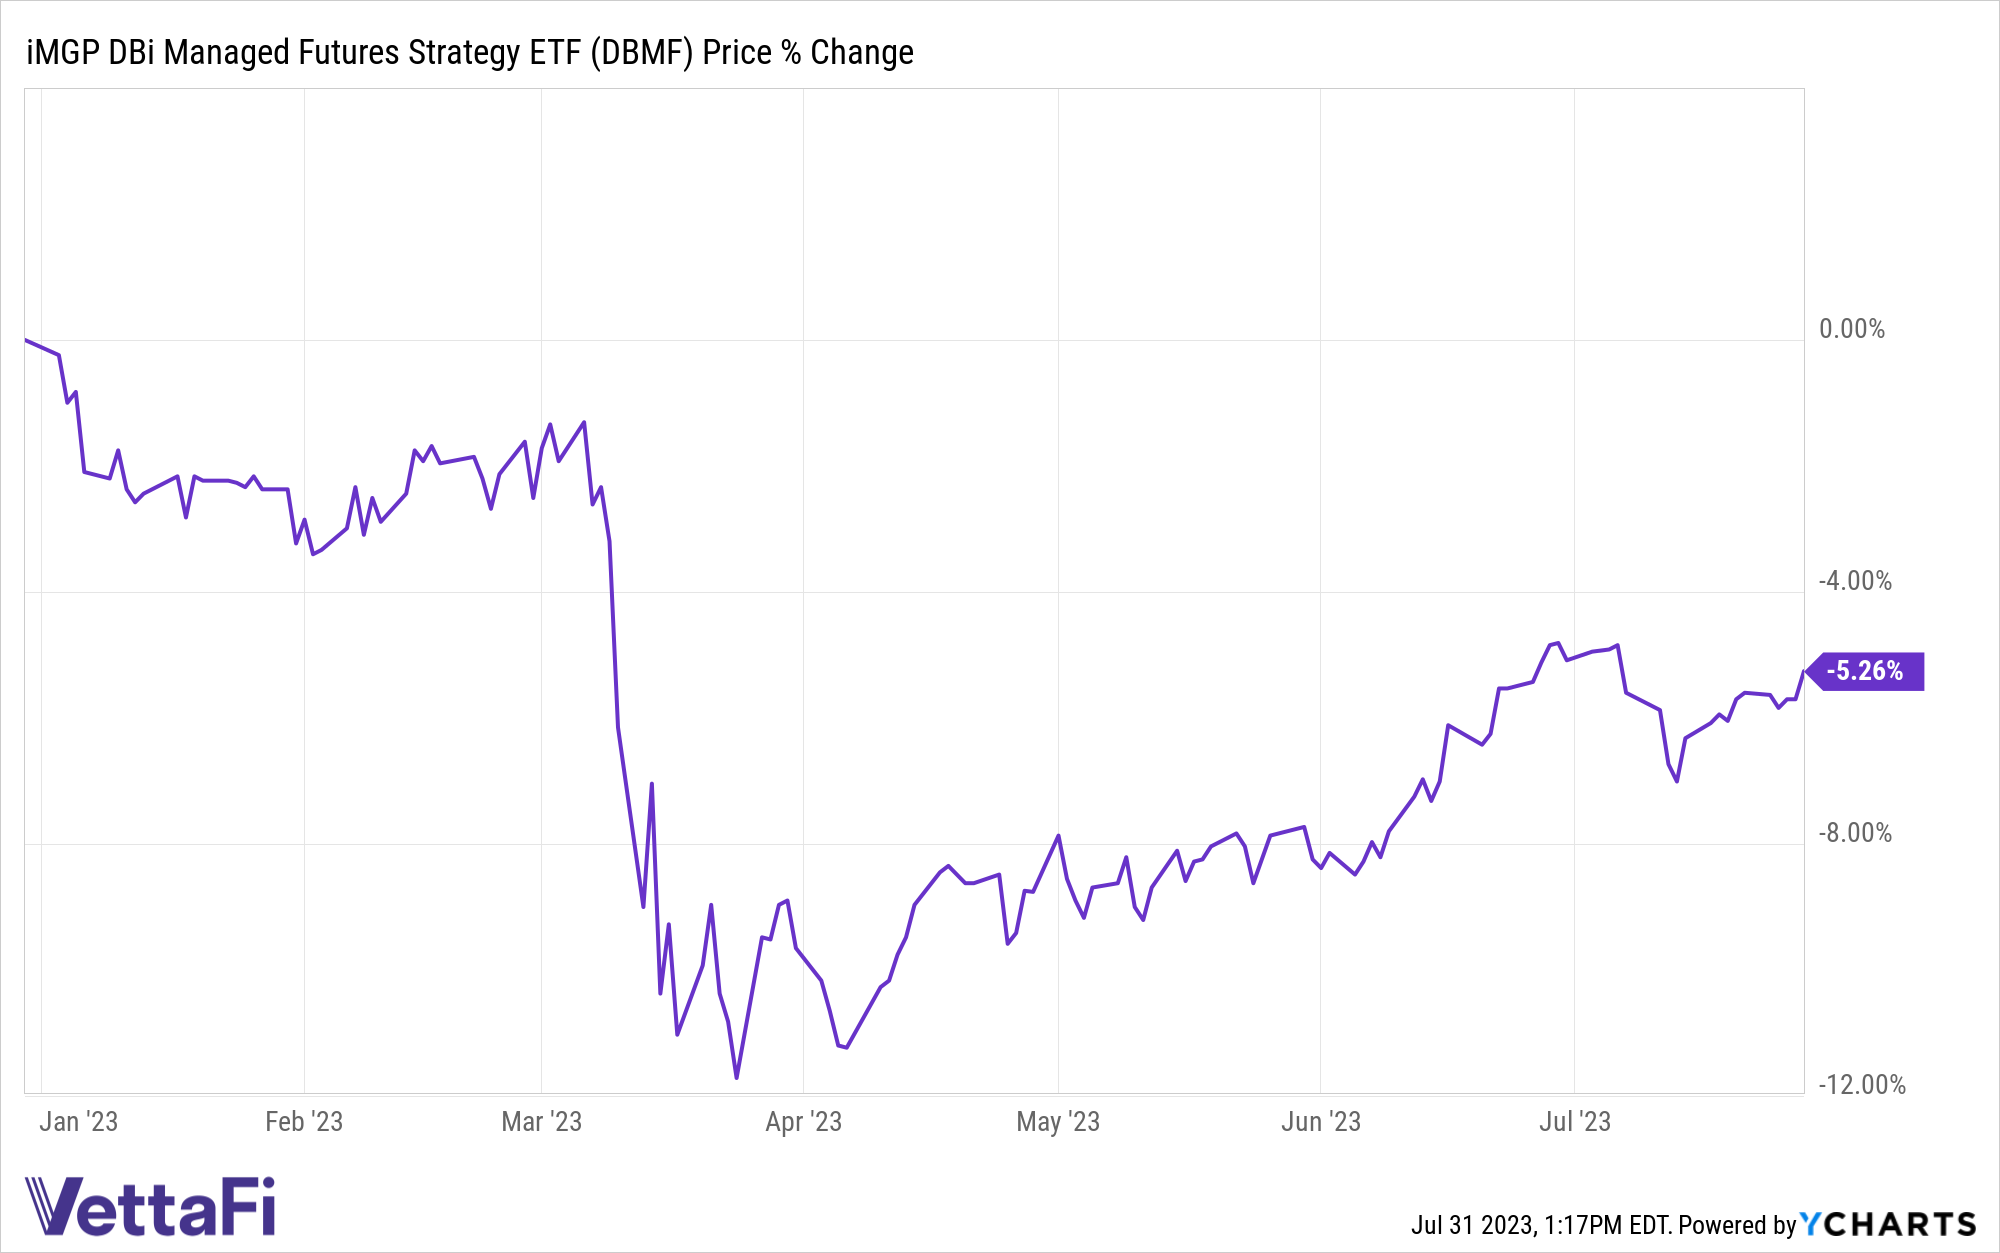 Price chart of DBMF YTD, down 5.26%